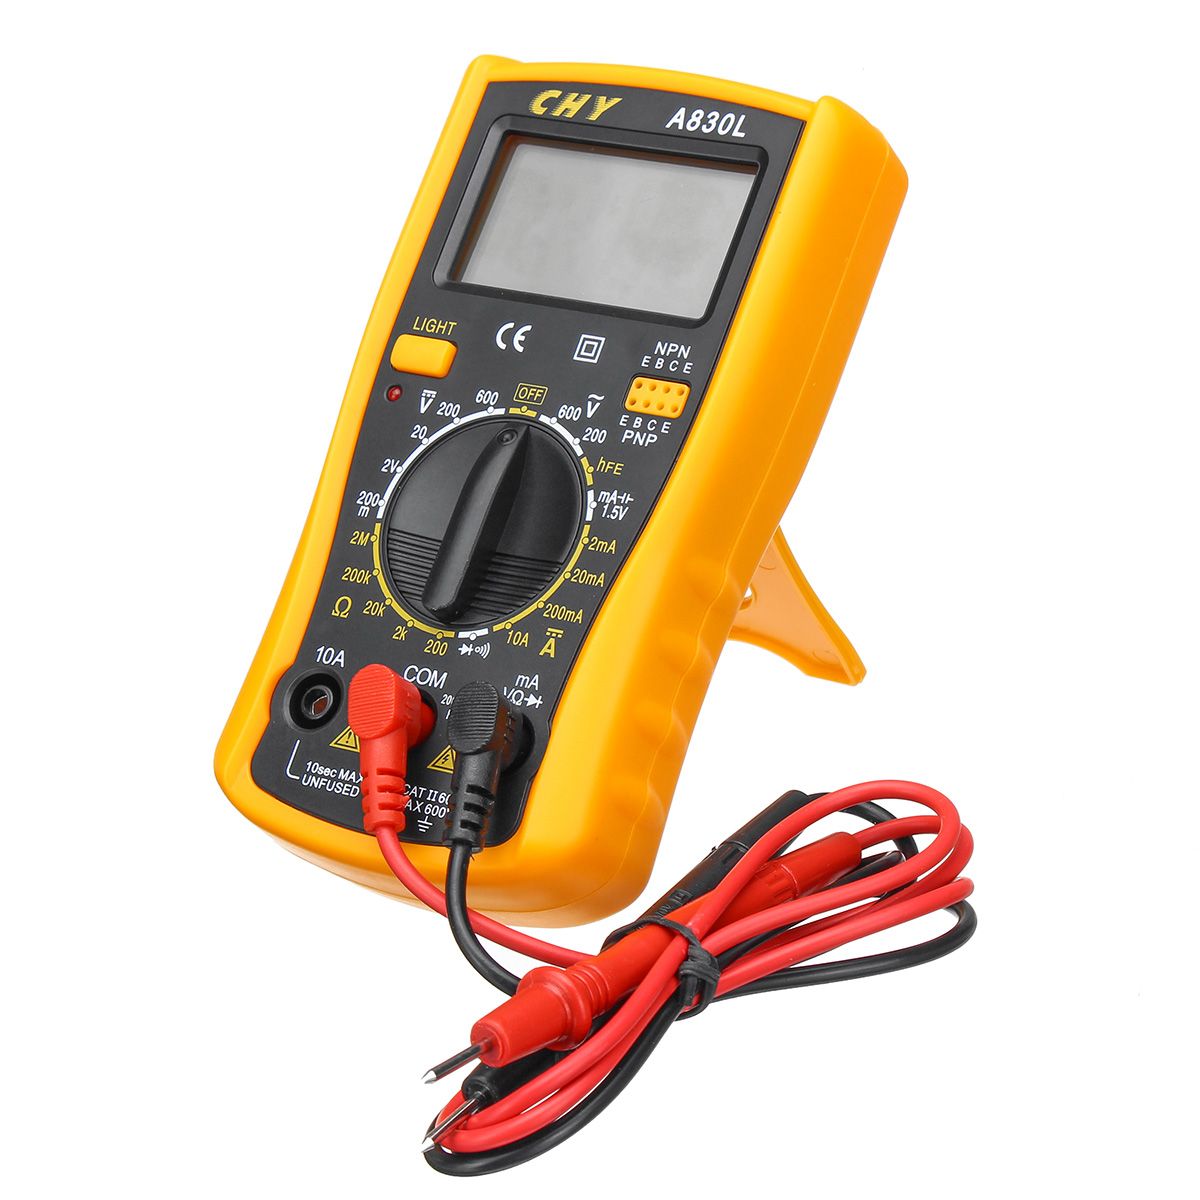 60W-Electric-Adjustable-Temperature-Solder-Iron-Multimeter-Welding-Tool-Set-1456446